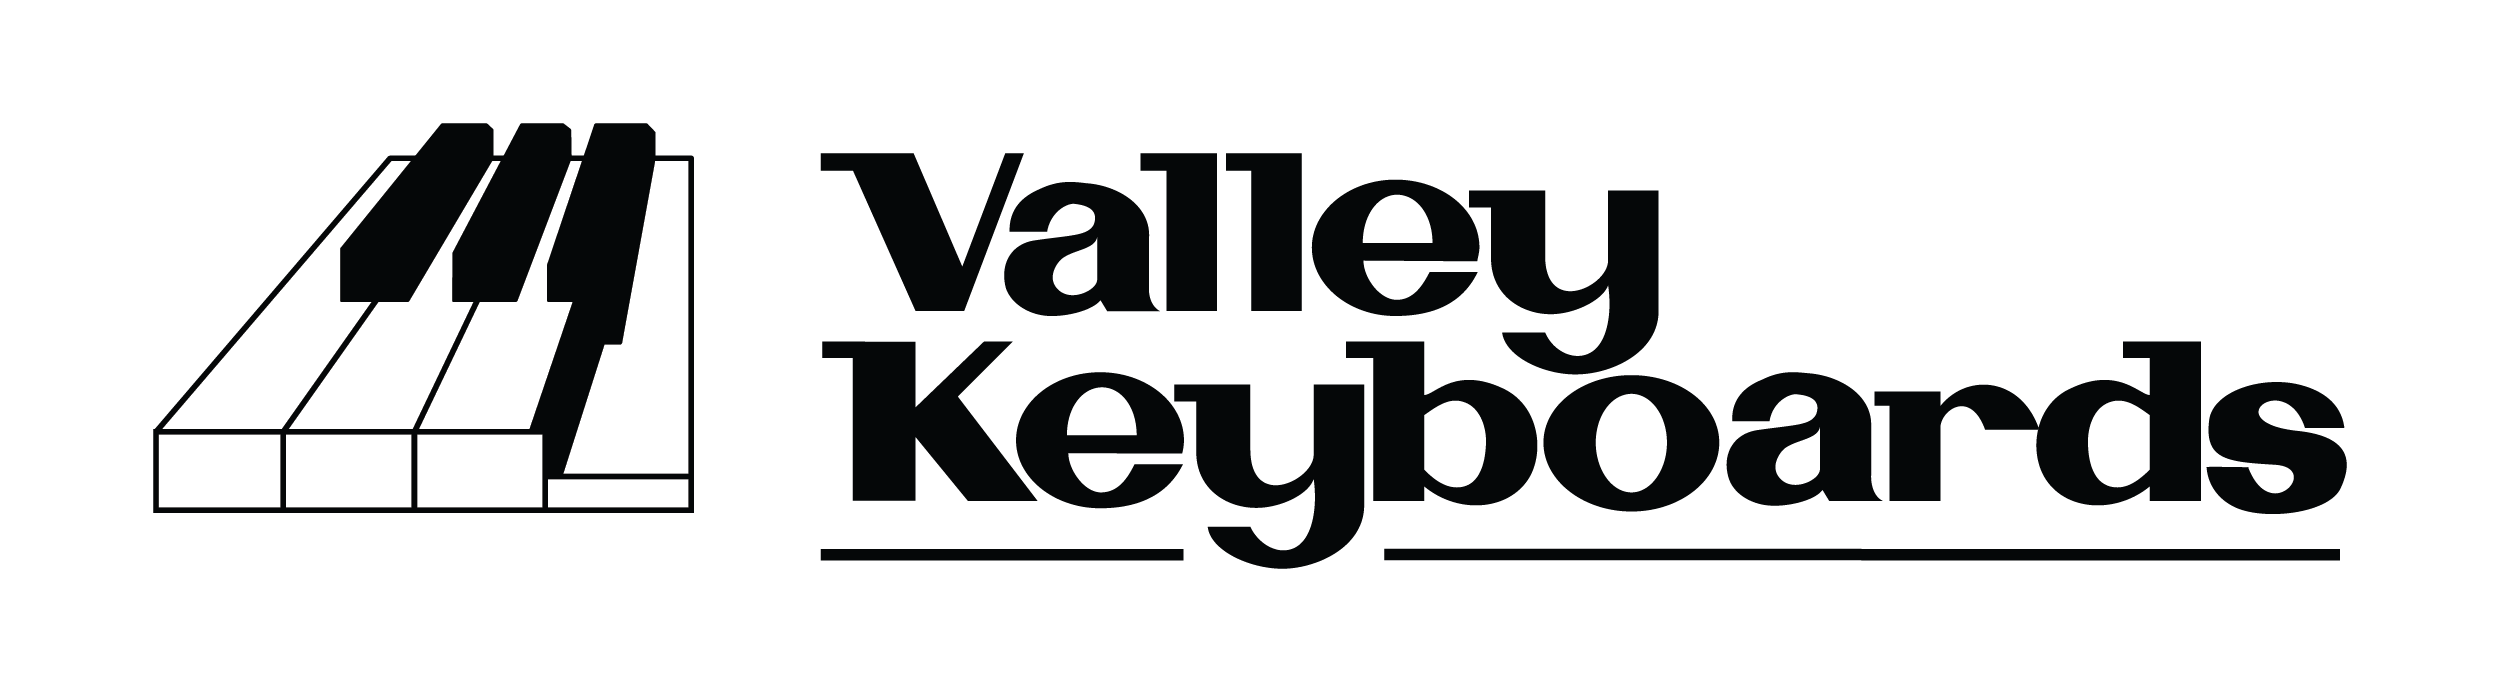 Logo Valley Keyboards